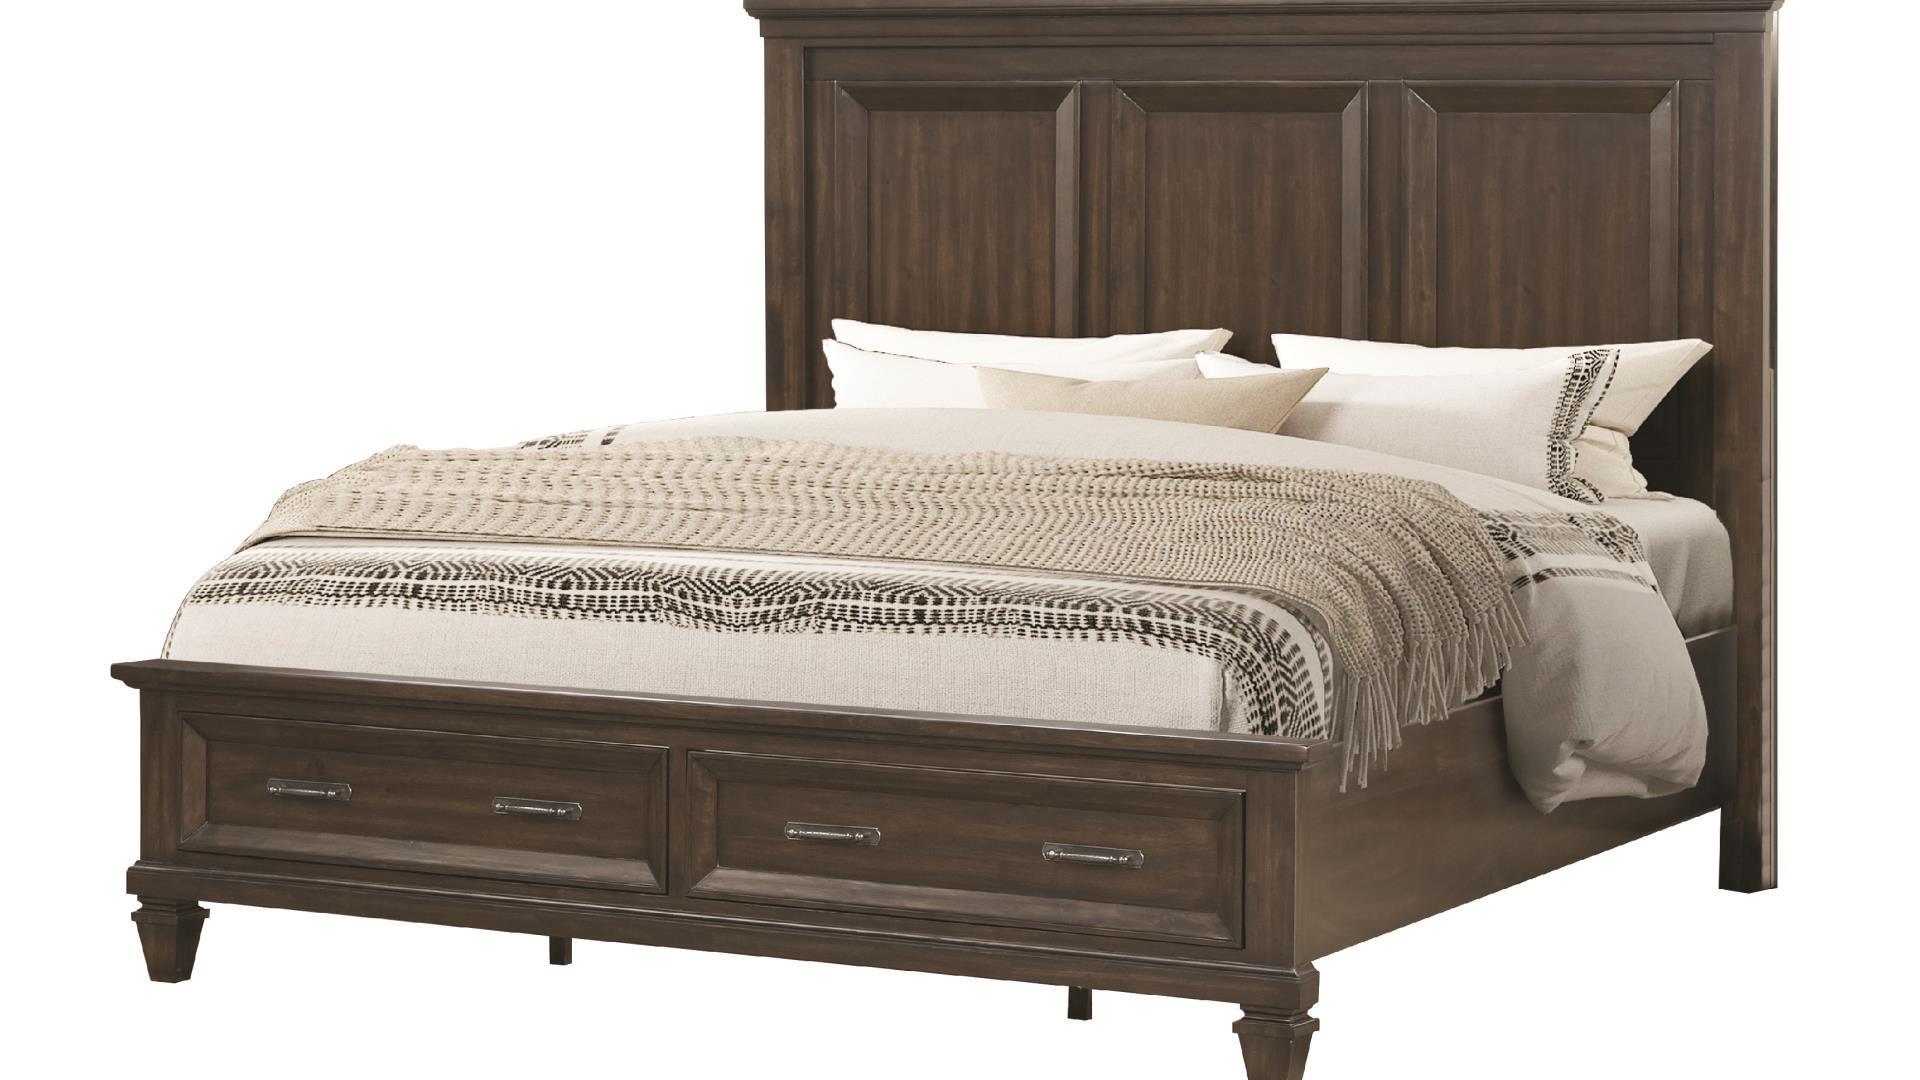 

    
Walnut Solid Wood Queen Bedroom Set 5P HAMILTON Galaxy Home Classic Traditional
